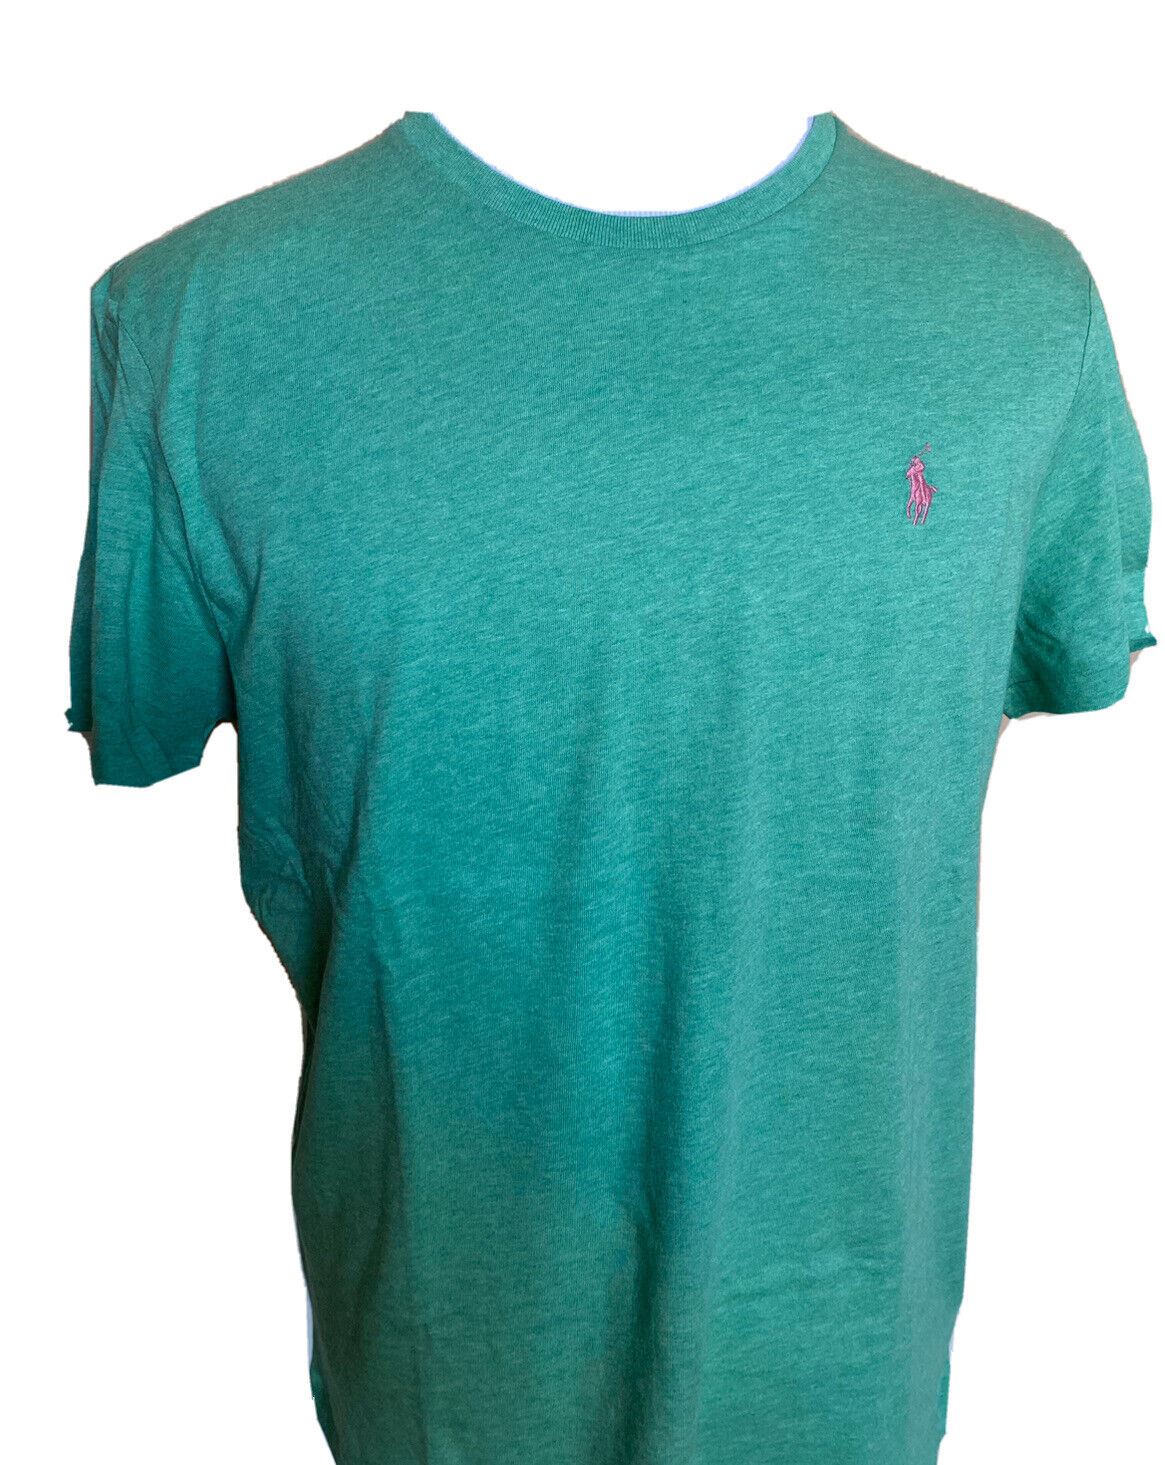 Хлопковая футболка с короткими рукавами NWT Polo Ralph Lauren, зеленая 2XL 